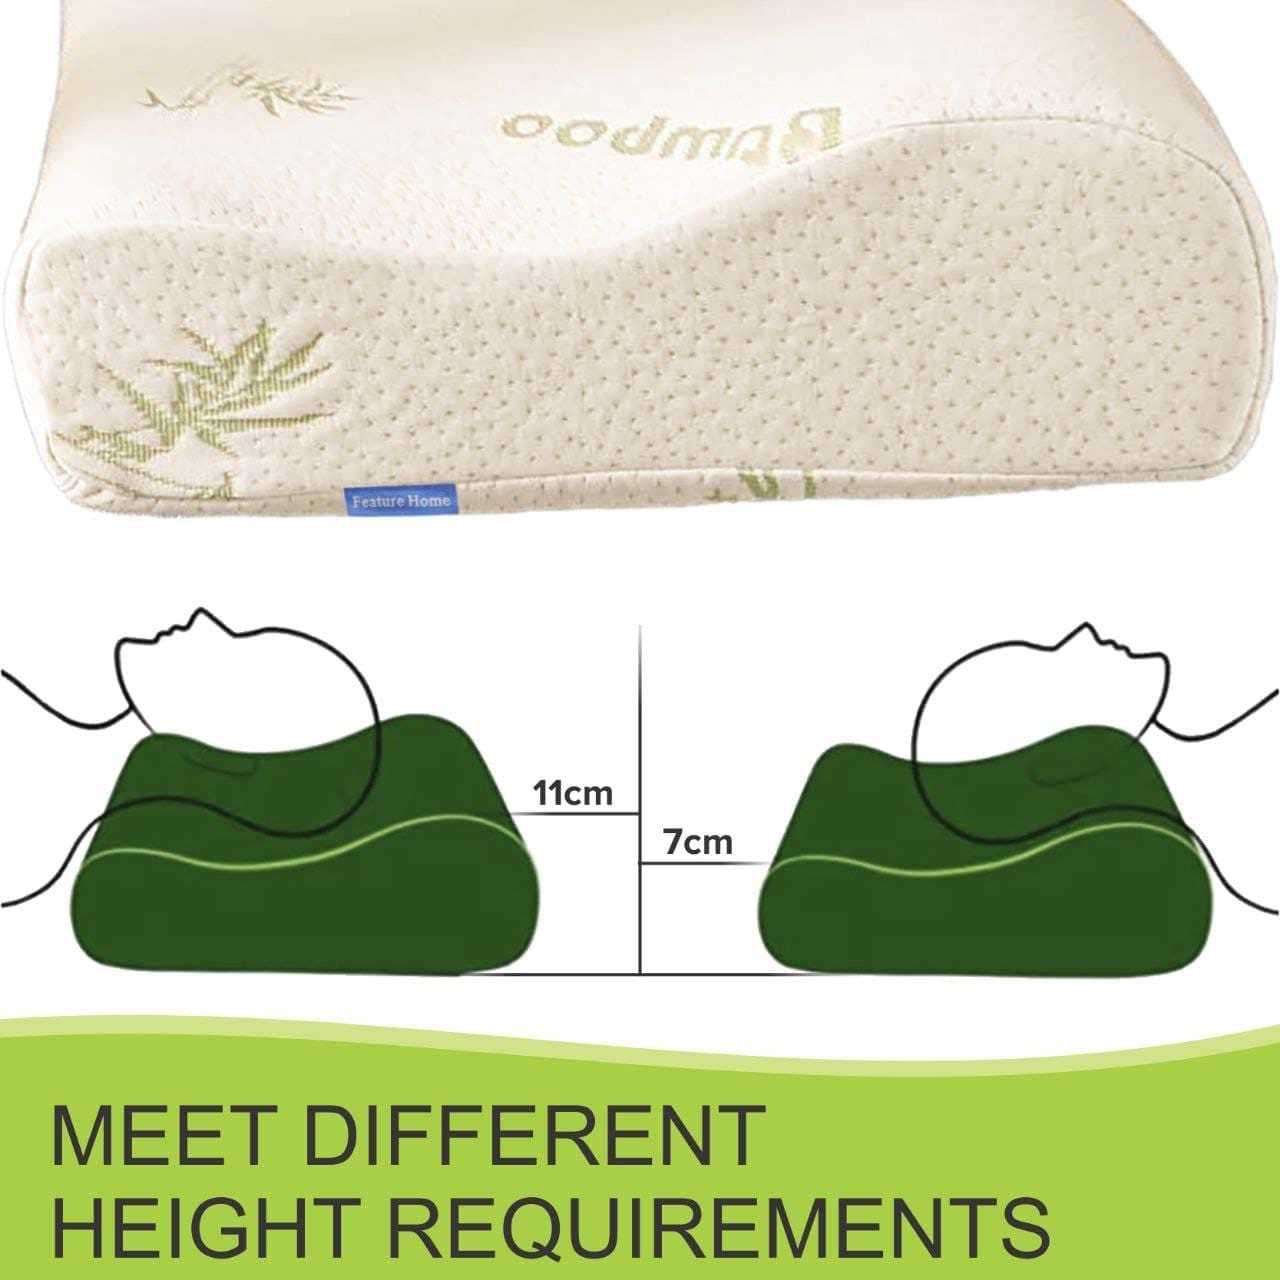 Shredded Foam Crumb High-quality Upholstery Foam Shred Crumb Filling for  Cushions, Bean Bag Inserts Etc 